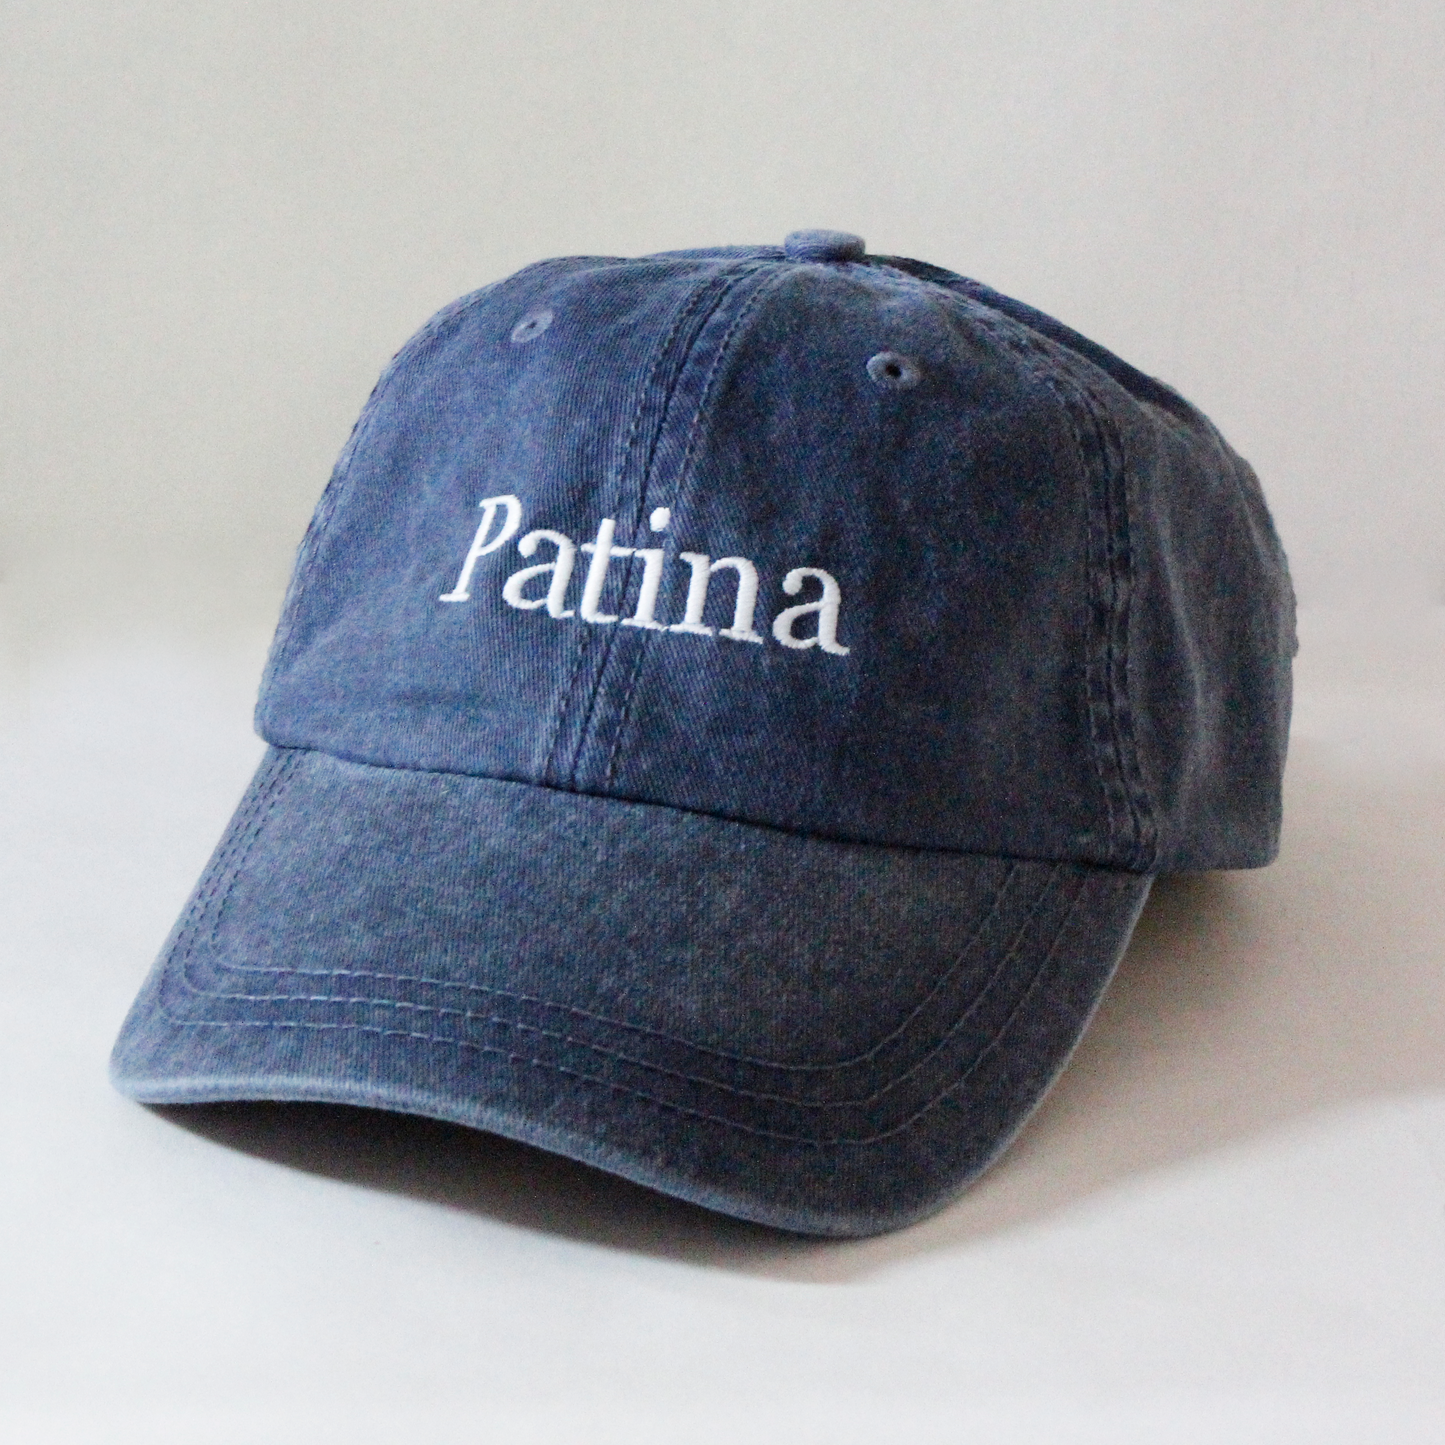 Patina Vintage Cap / Hat